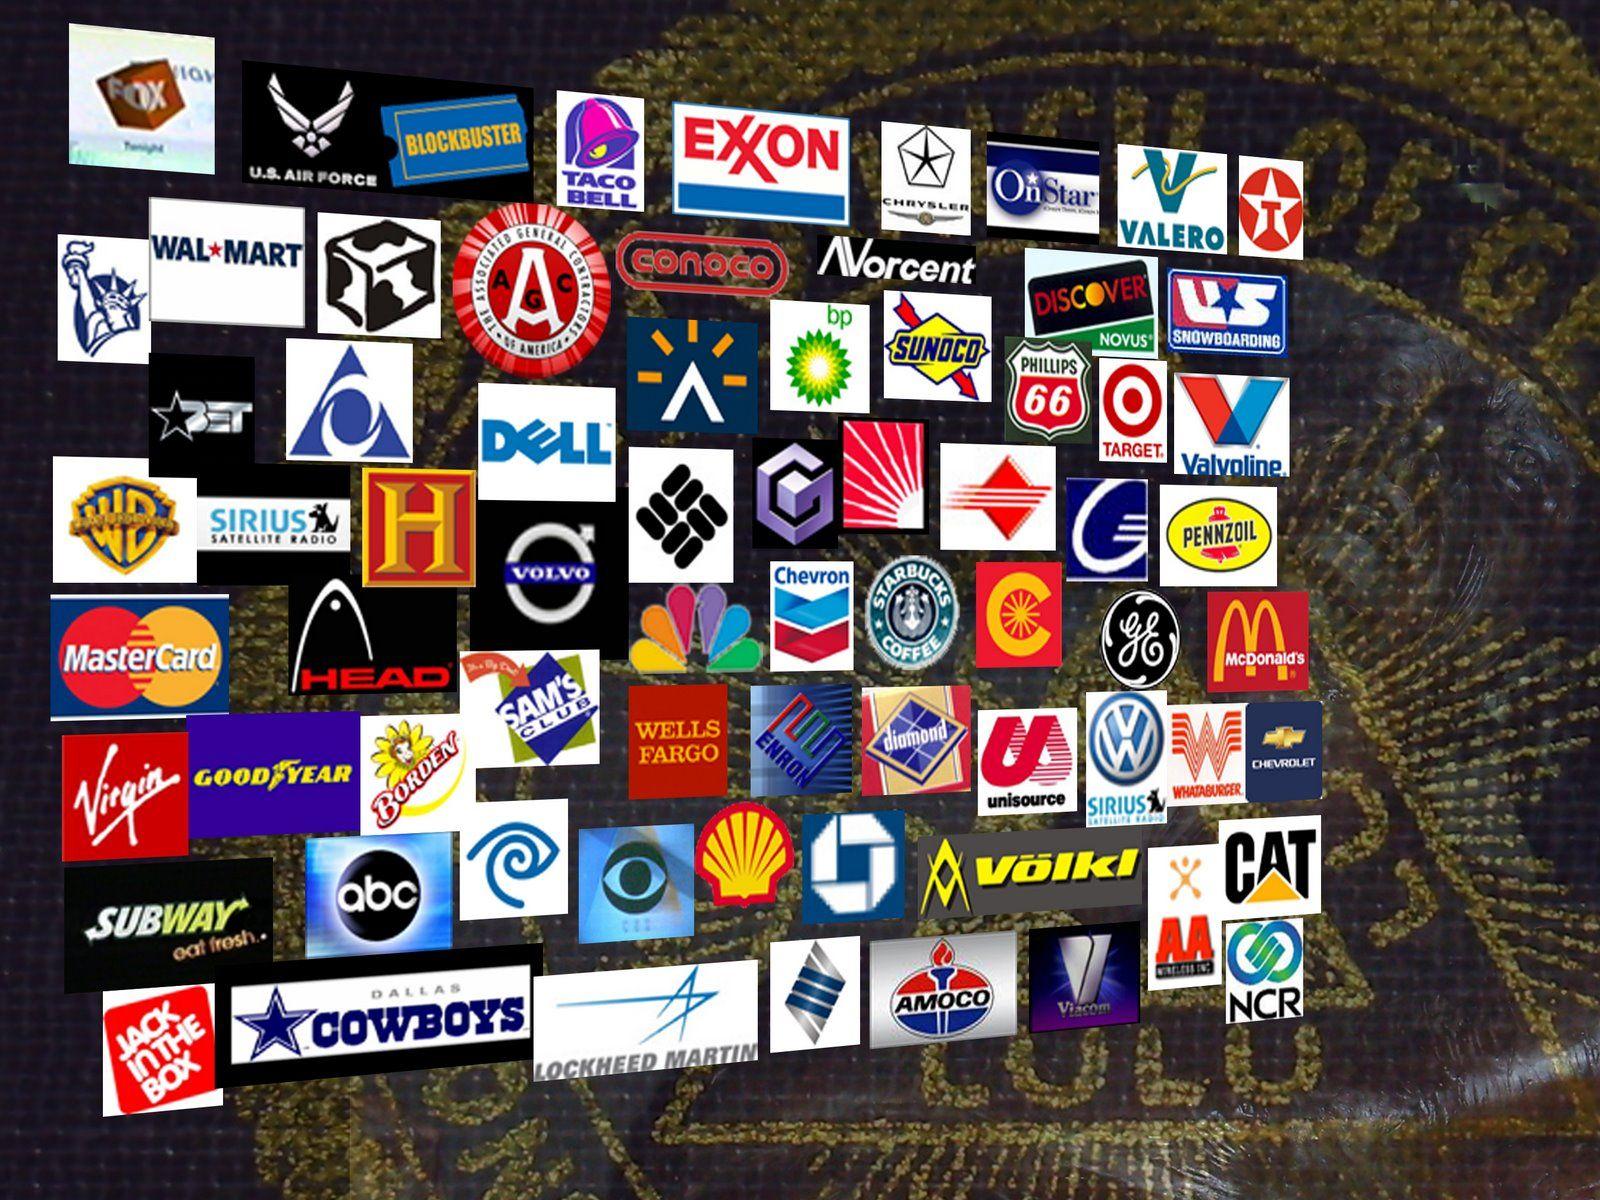 Illuminati Symbols in Corporate Logo - The Freeman Perspective: Illuminati Corporate Logo Symbolism